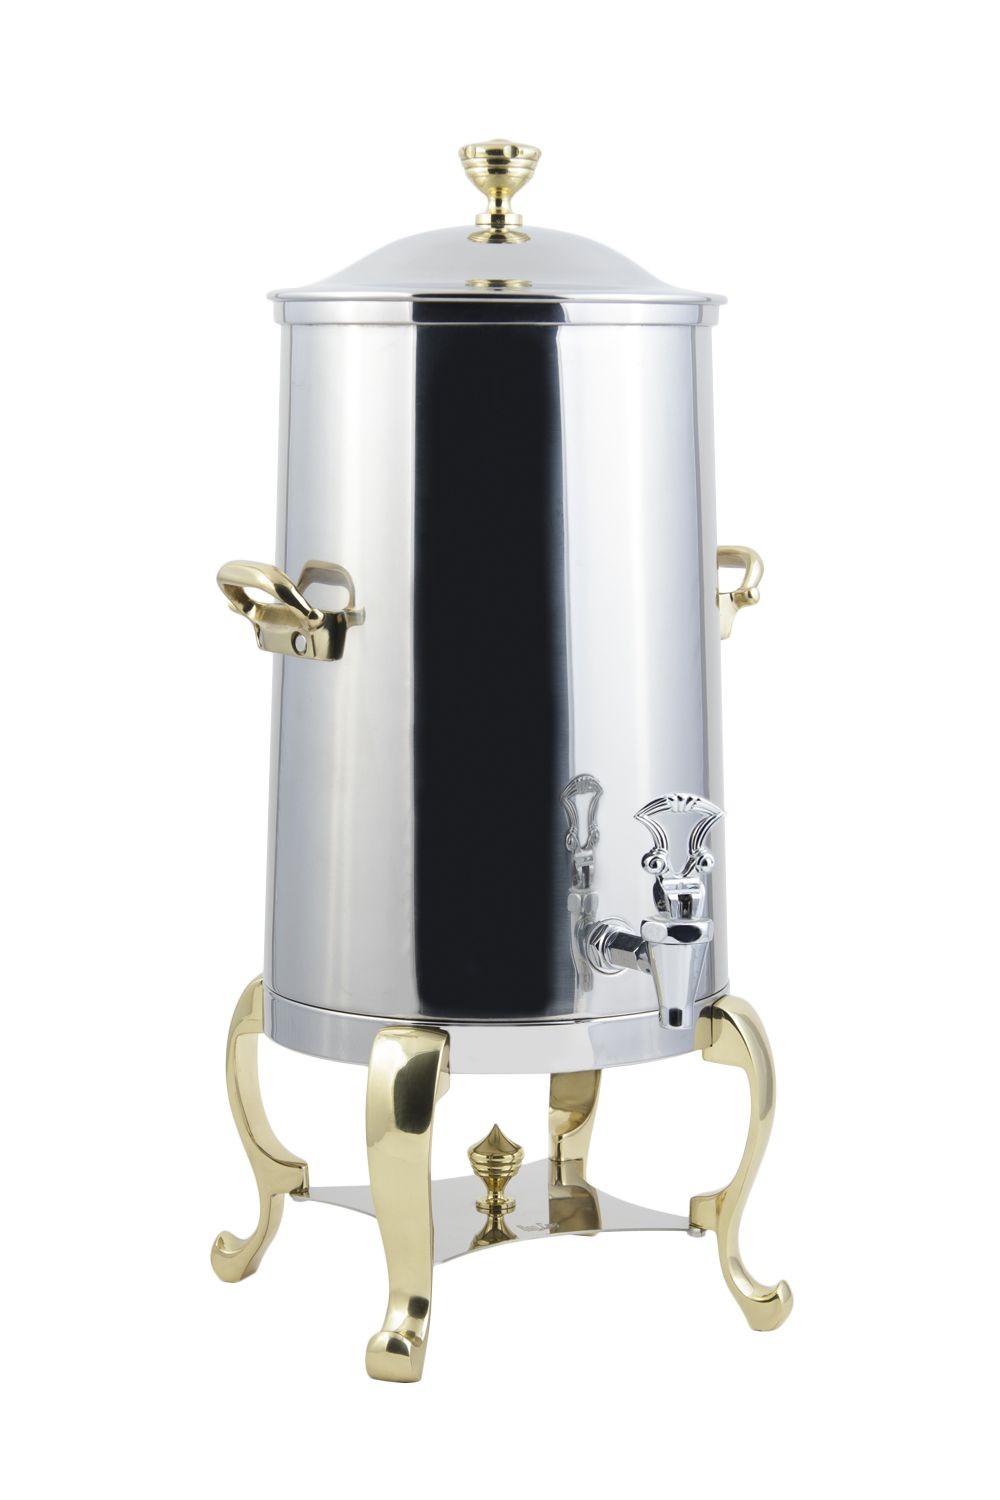 Bon Chef 49005 Roman Insulated Coffee Urn with Brass Trim, 5 Gallon